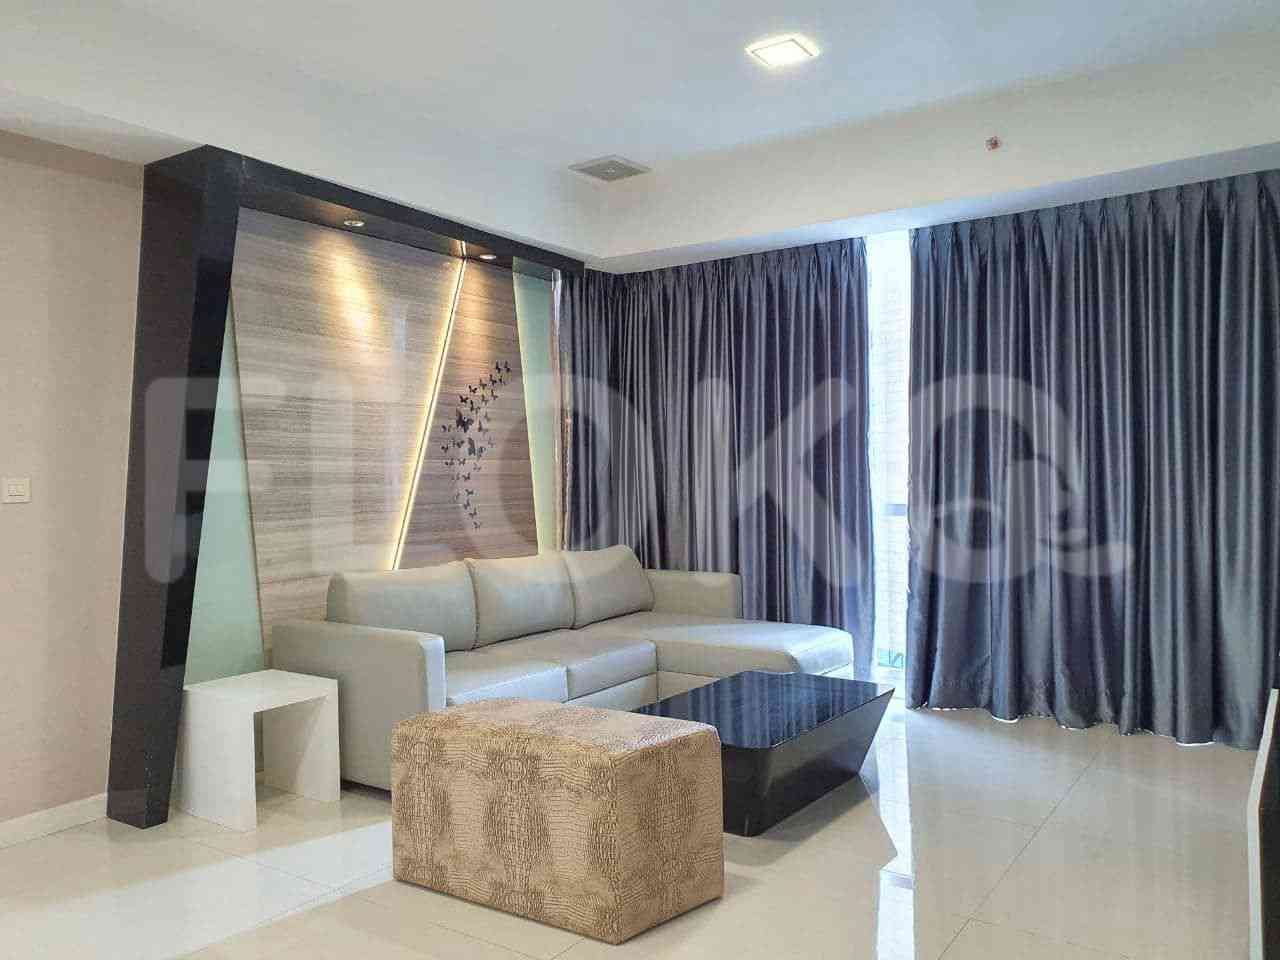 2 Bedroom on 17th Floor for Rent in Kemang Village Residence - fke165 1